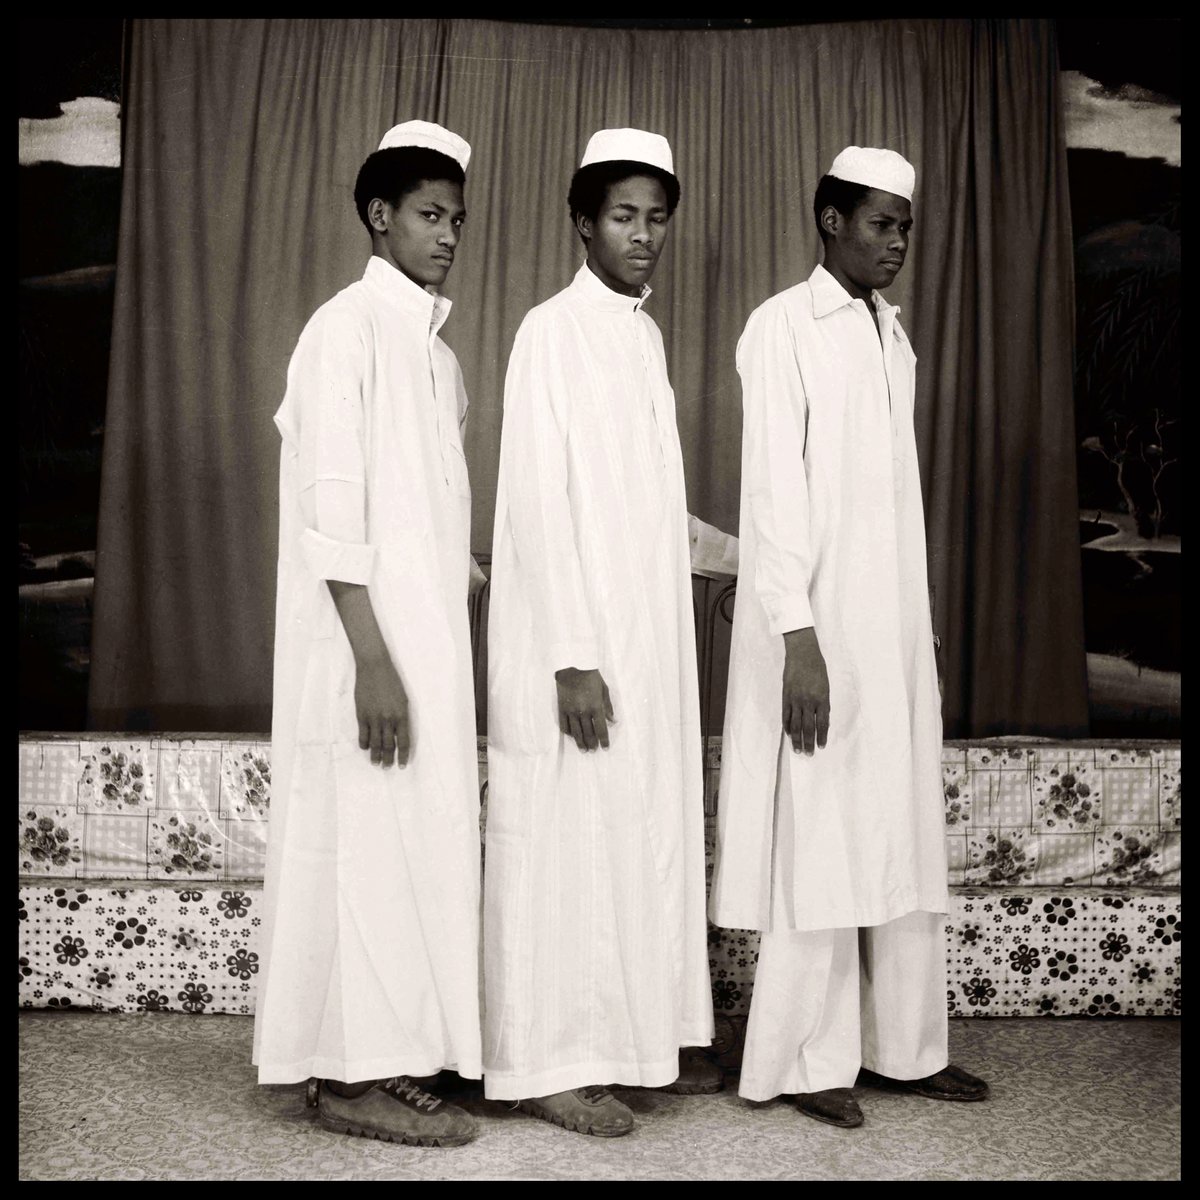 Aus der Sammlung „70er Jahre Studiofotografie des Fotografen Ngalamo Diedonné' aus Bangui, Republik-Zentralafrika.
© guenay ulutuncok | akg-images